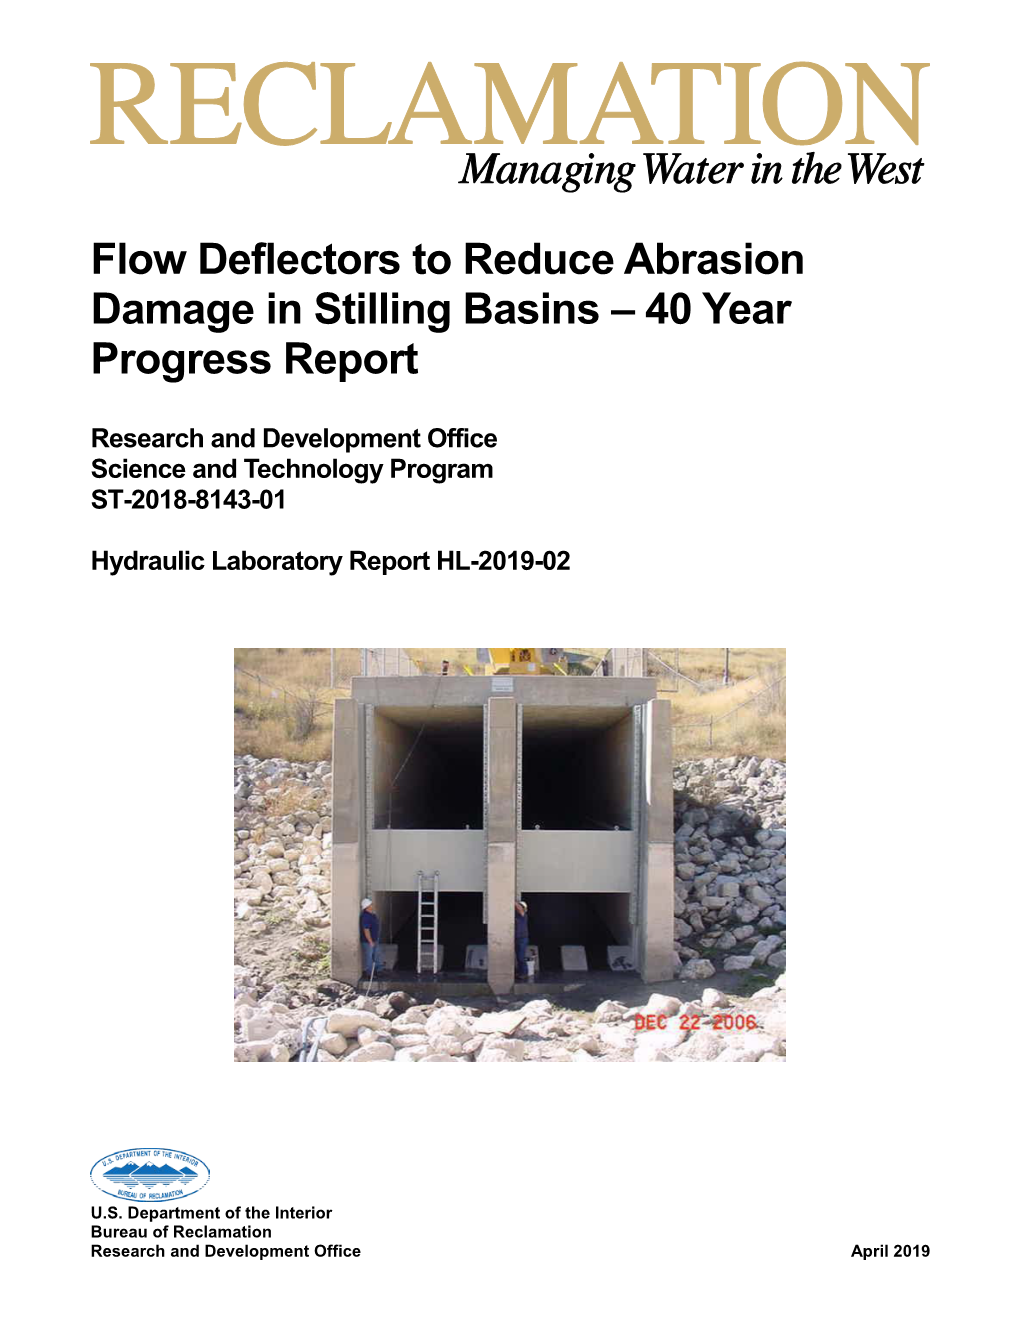 Flow Deflectors to Reduce Abrasion Damage in Stilling Basins – 40 Year Progress Report